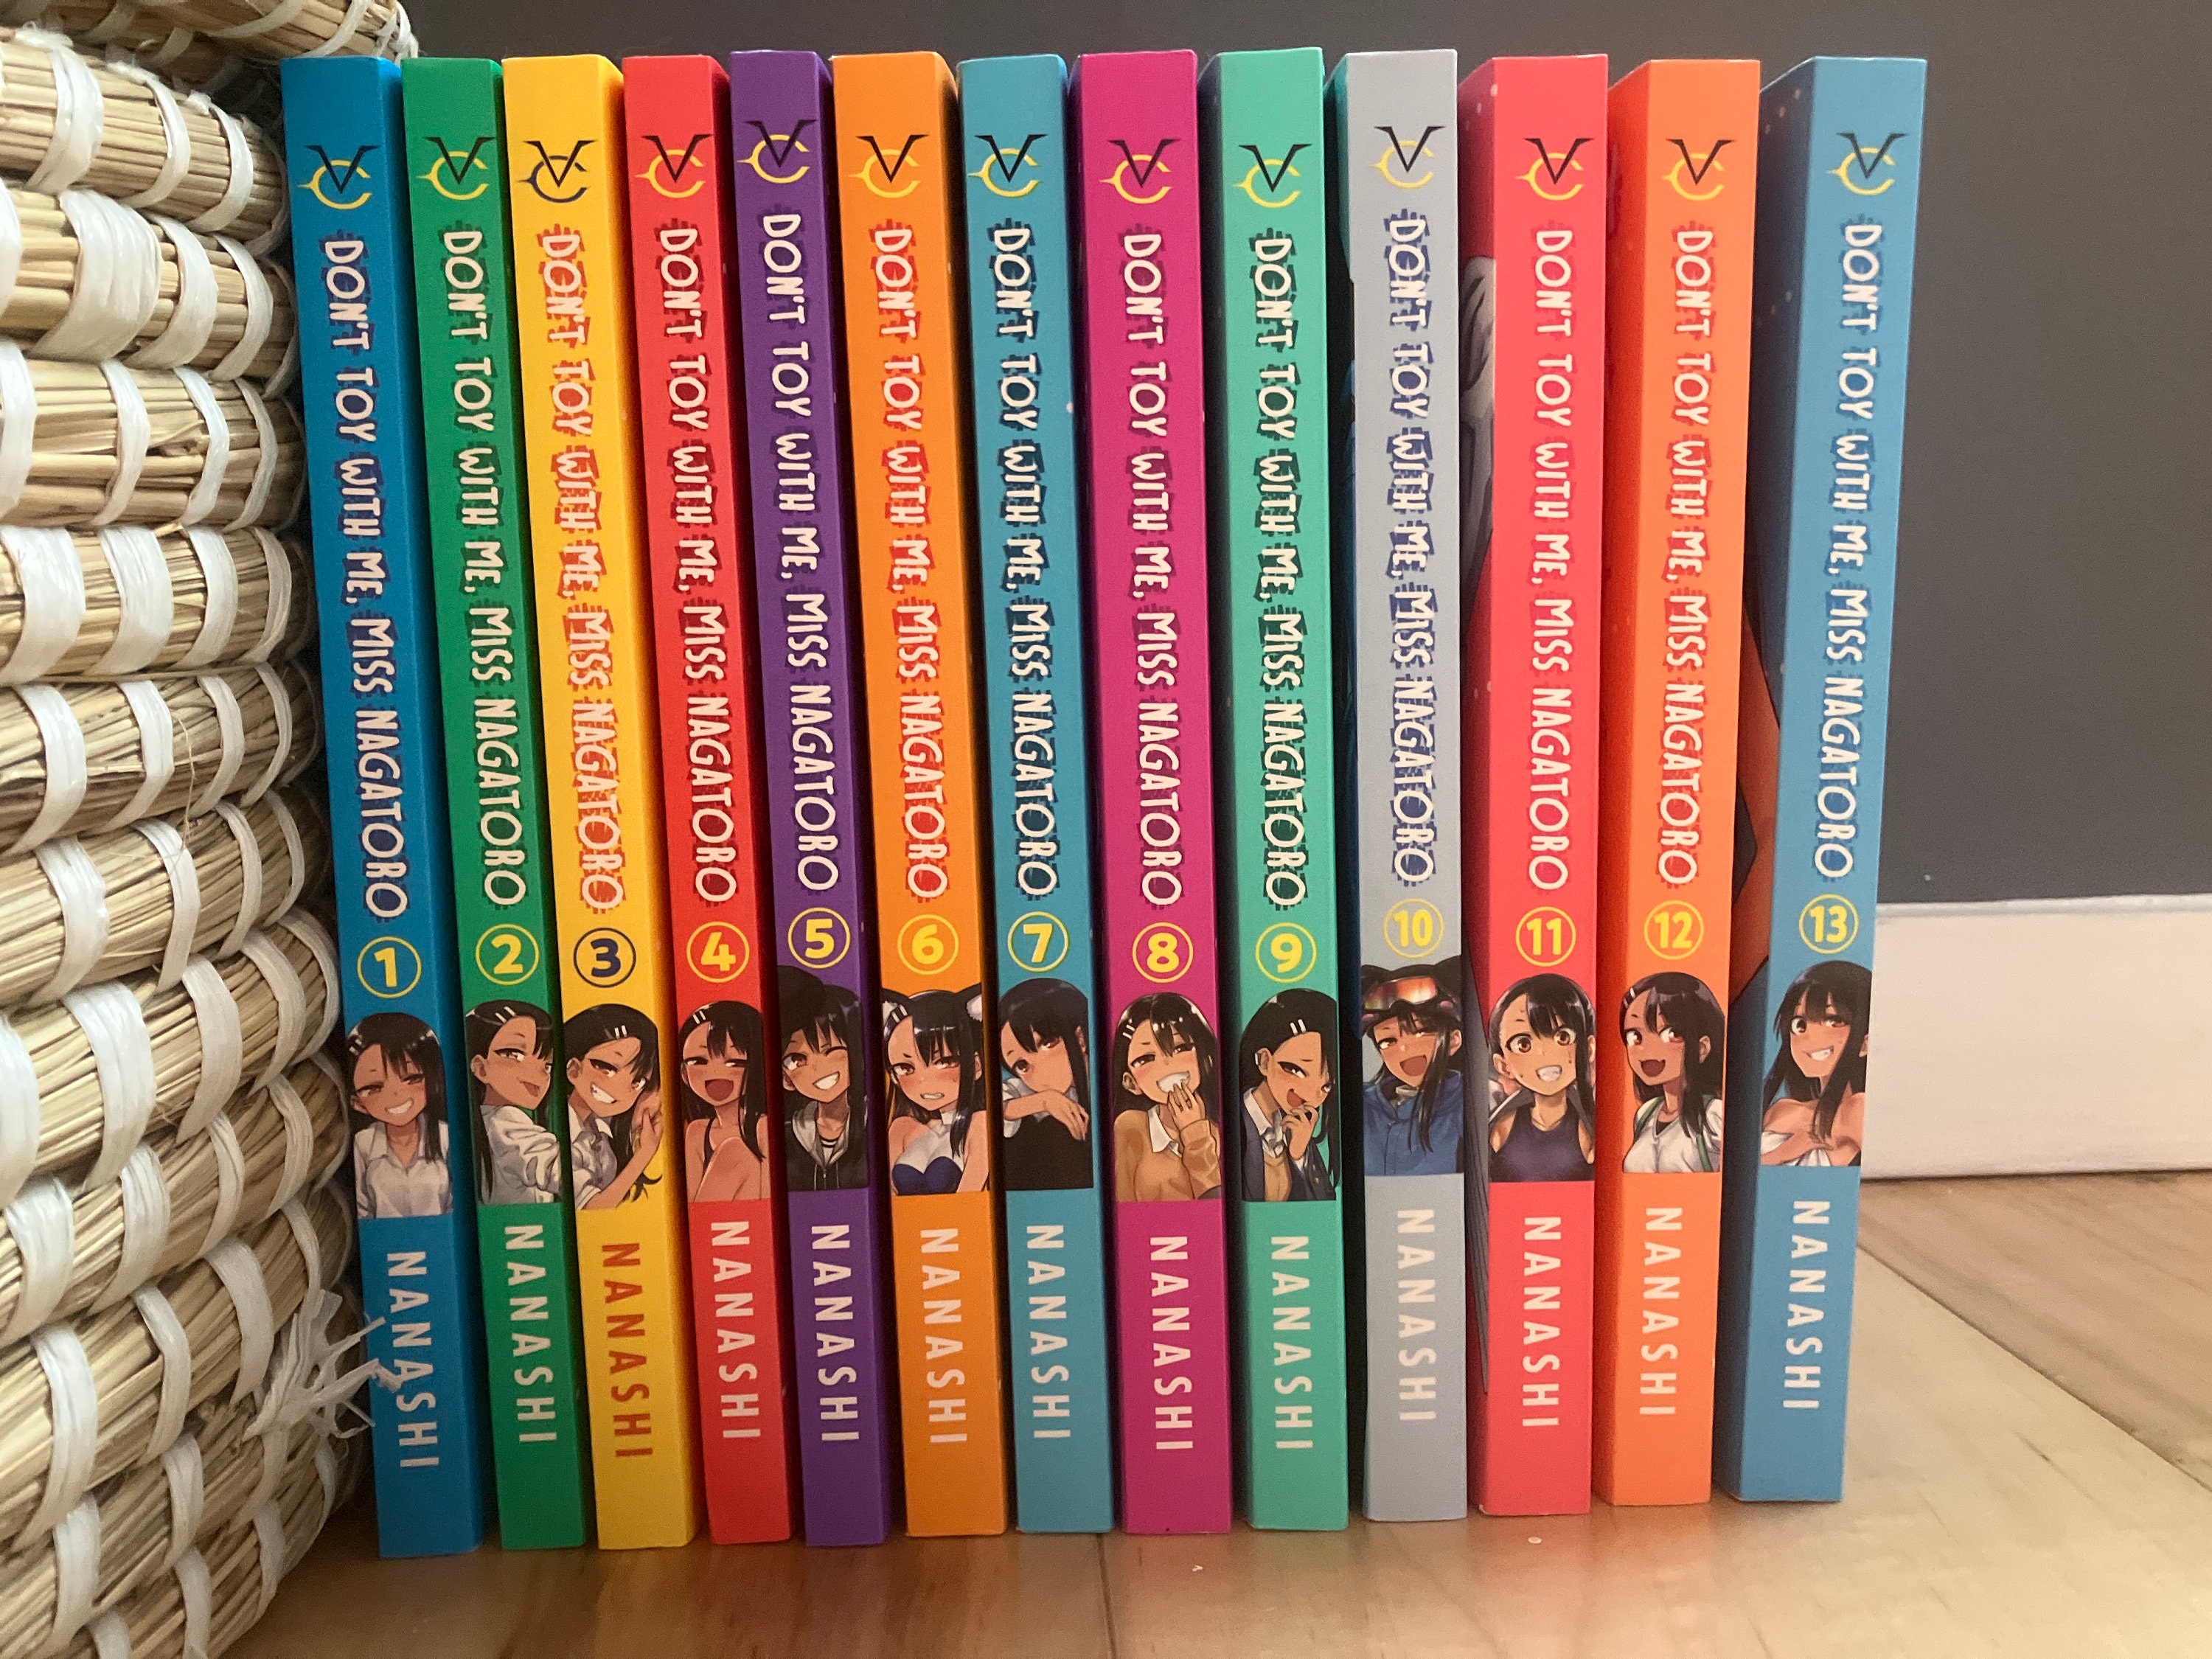 Don't Toy with Me, Miss Nagatoro Manga Box Set (Boxed Set)